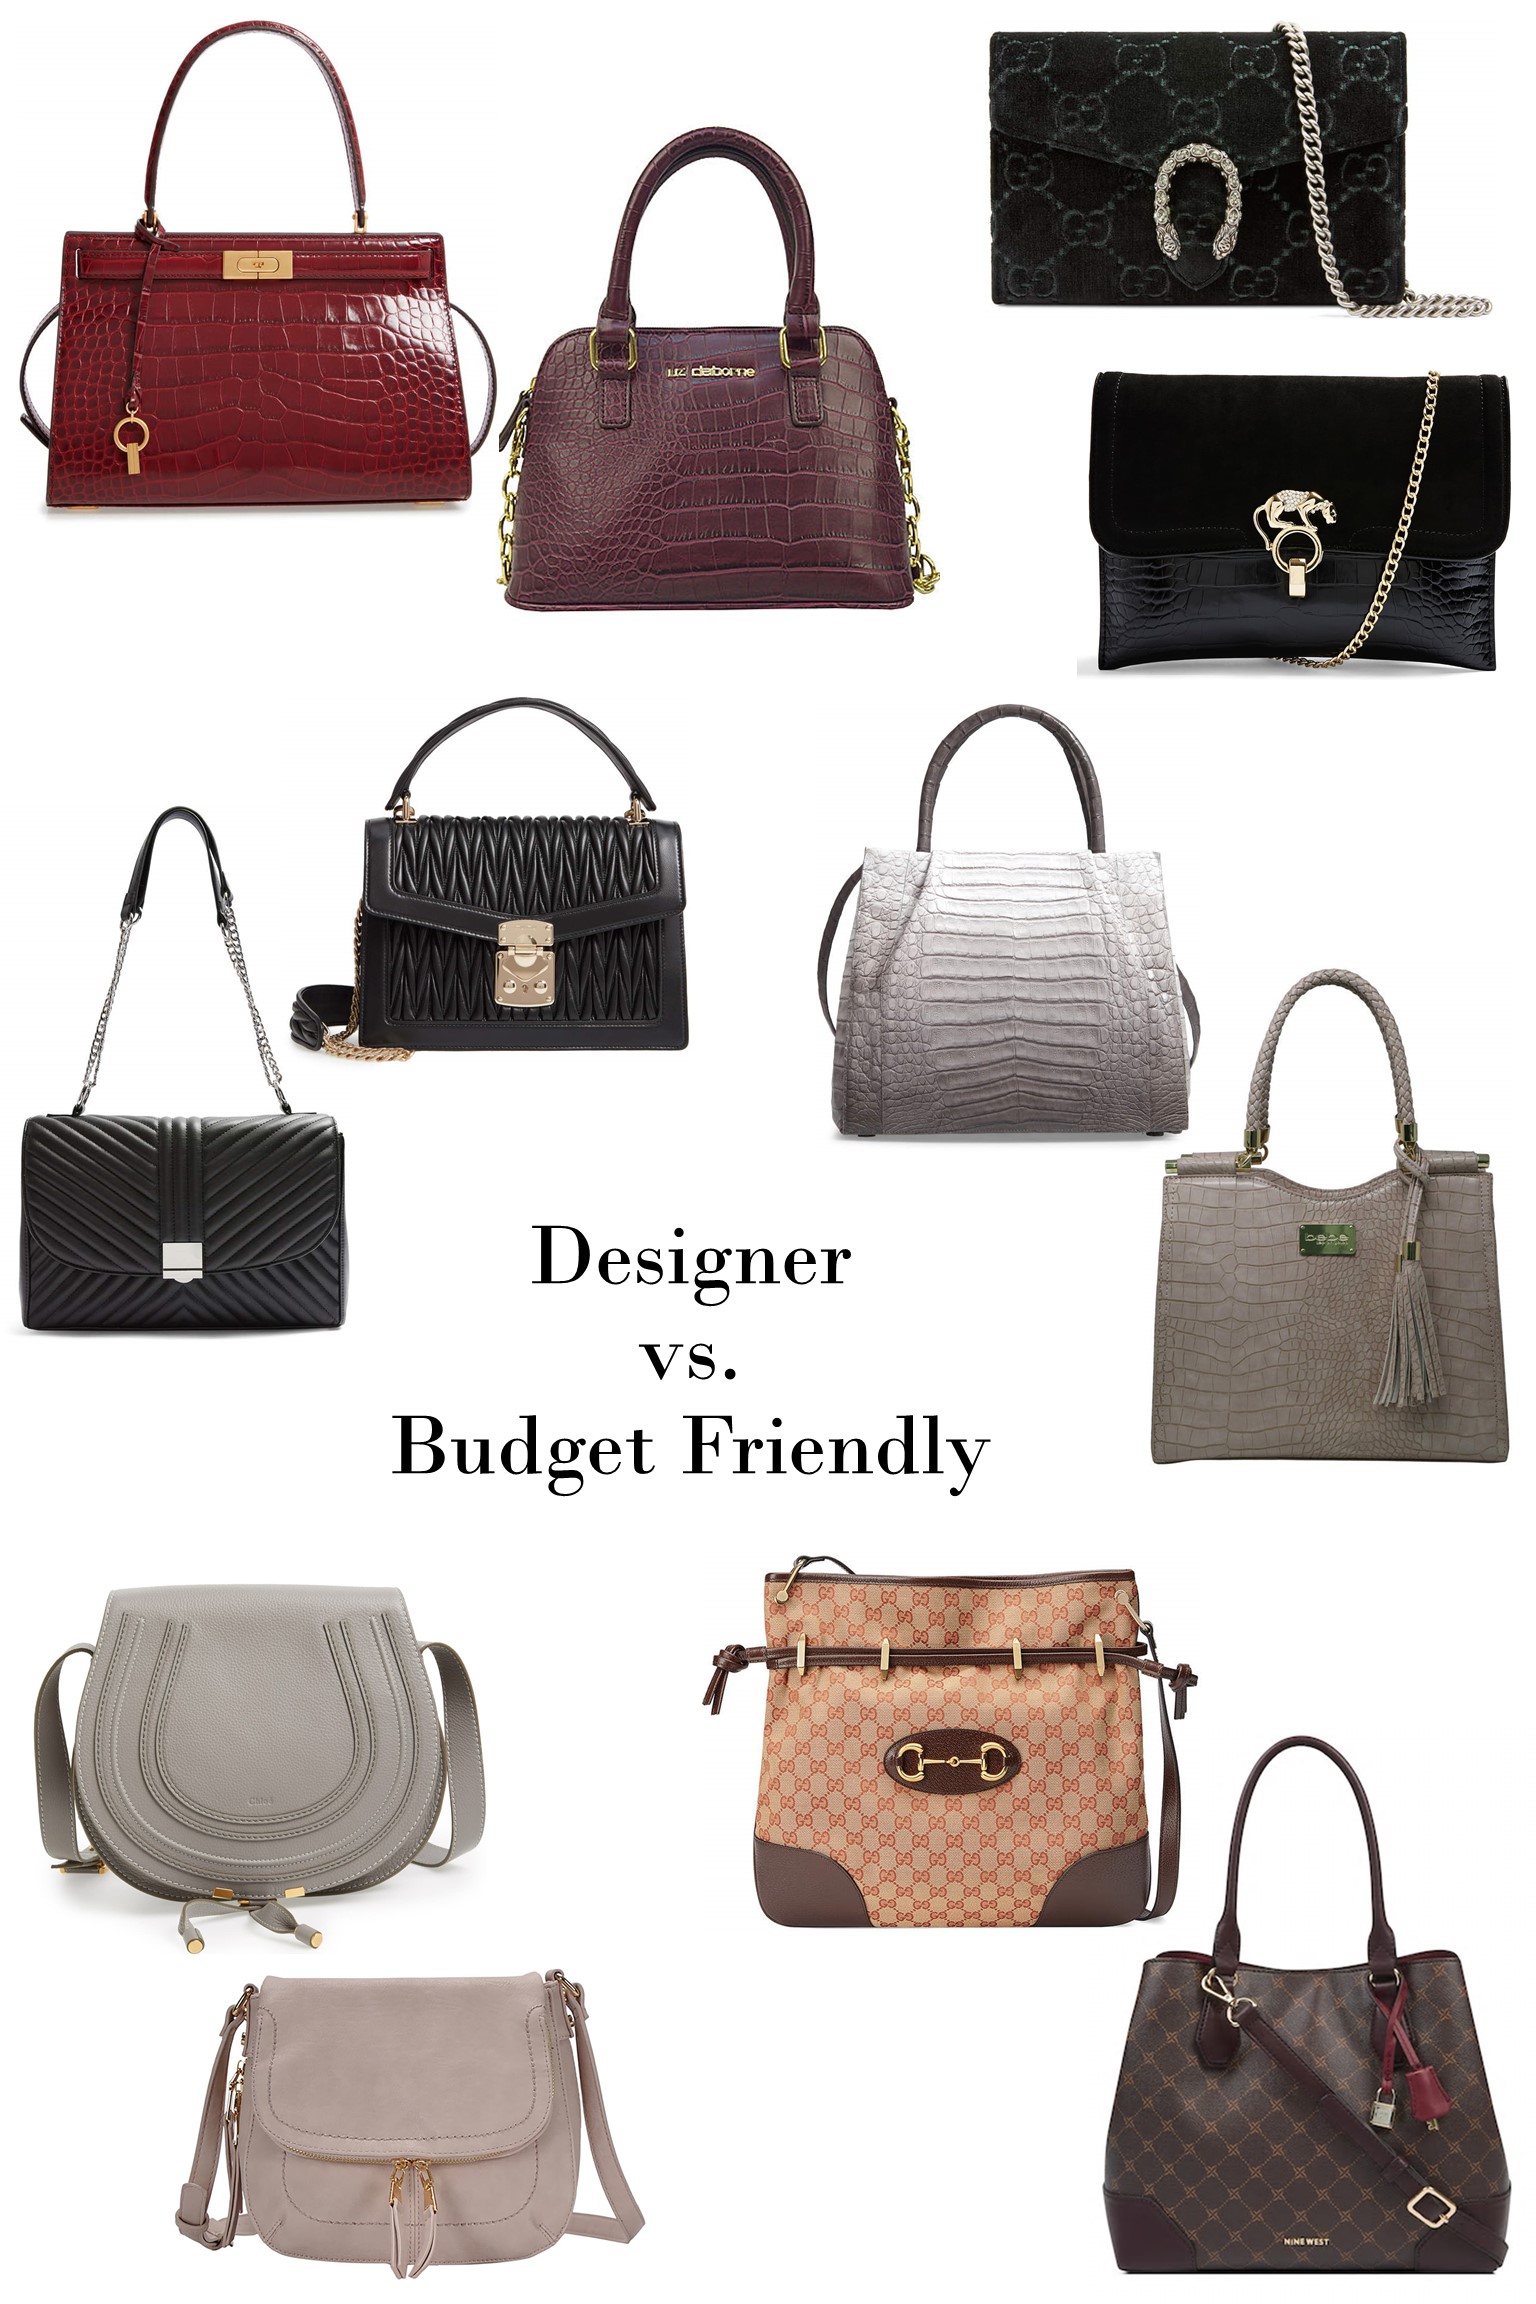 Designer vs. Budget Friendly Handbags - Dressed in Faith